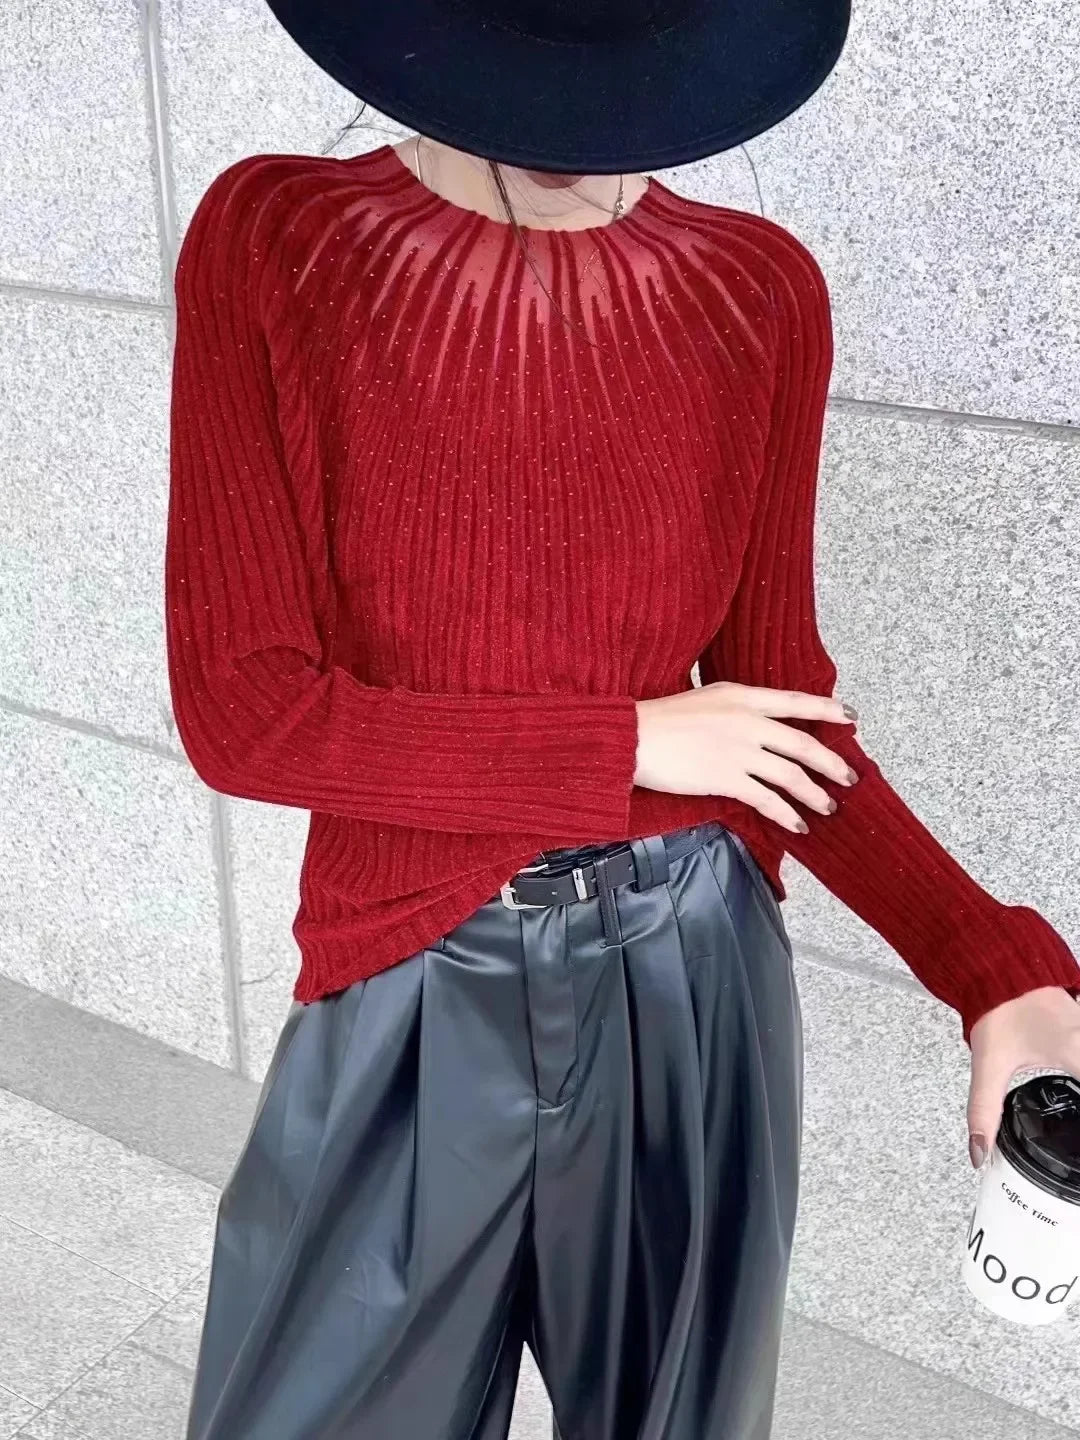 New Year European Clothes Red Velvet Sweater Women Turtleneck Rhinestone Slim Knit Top Long Sleeve Pullovers C-298